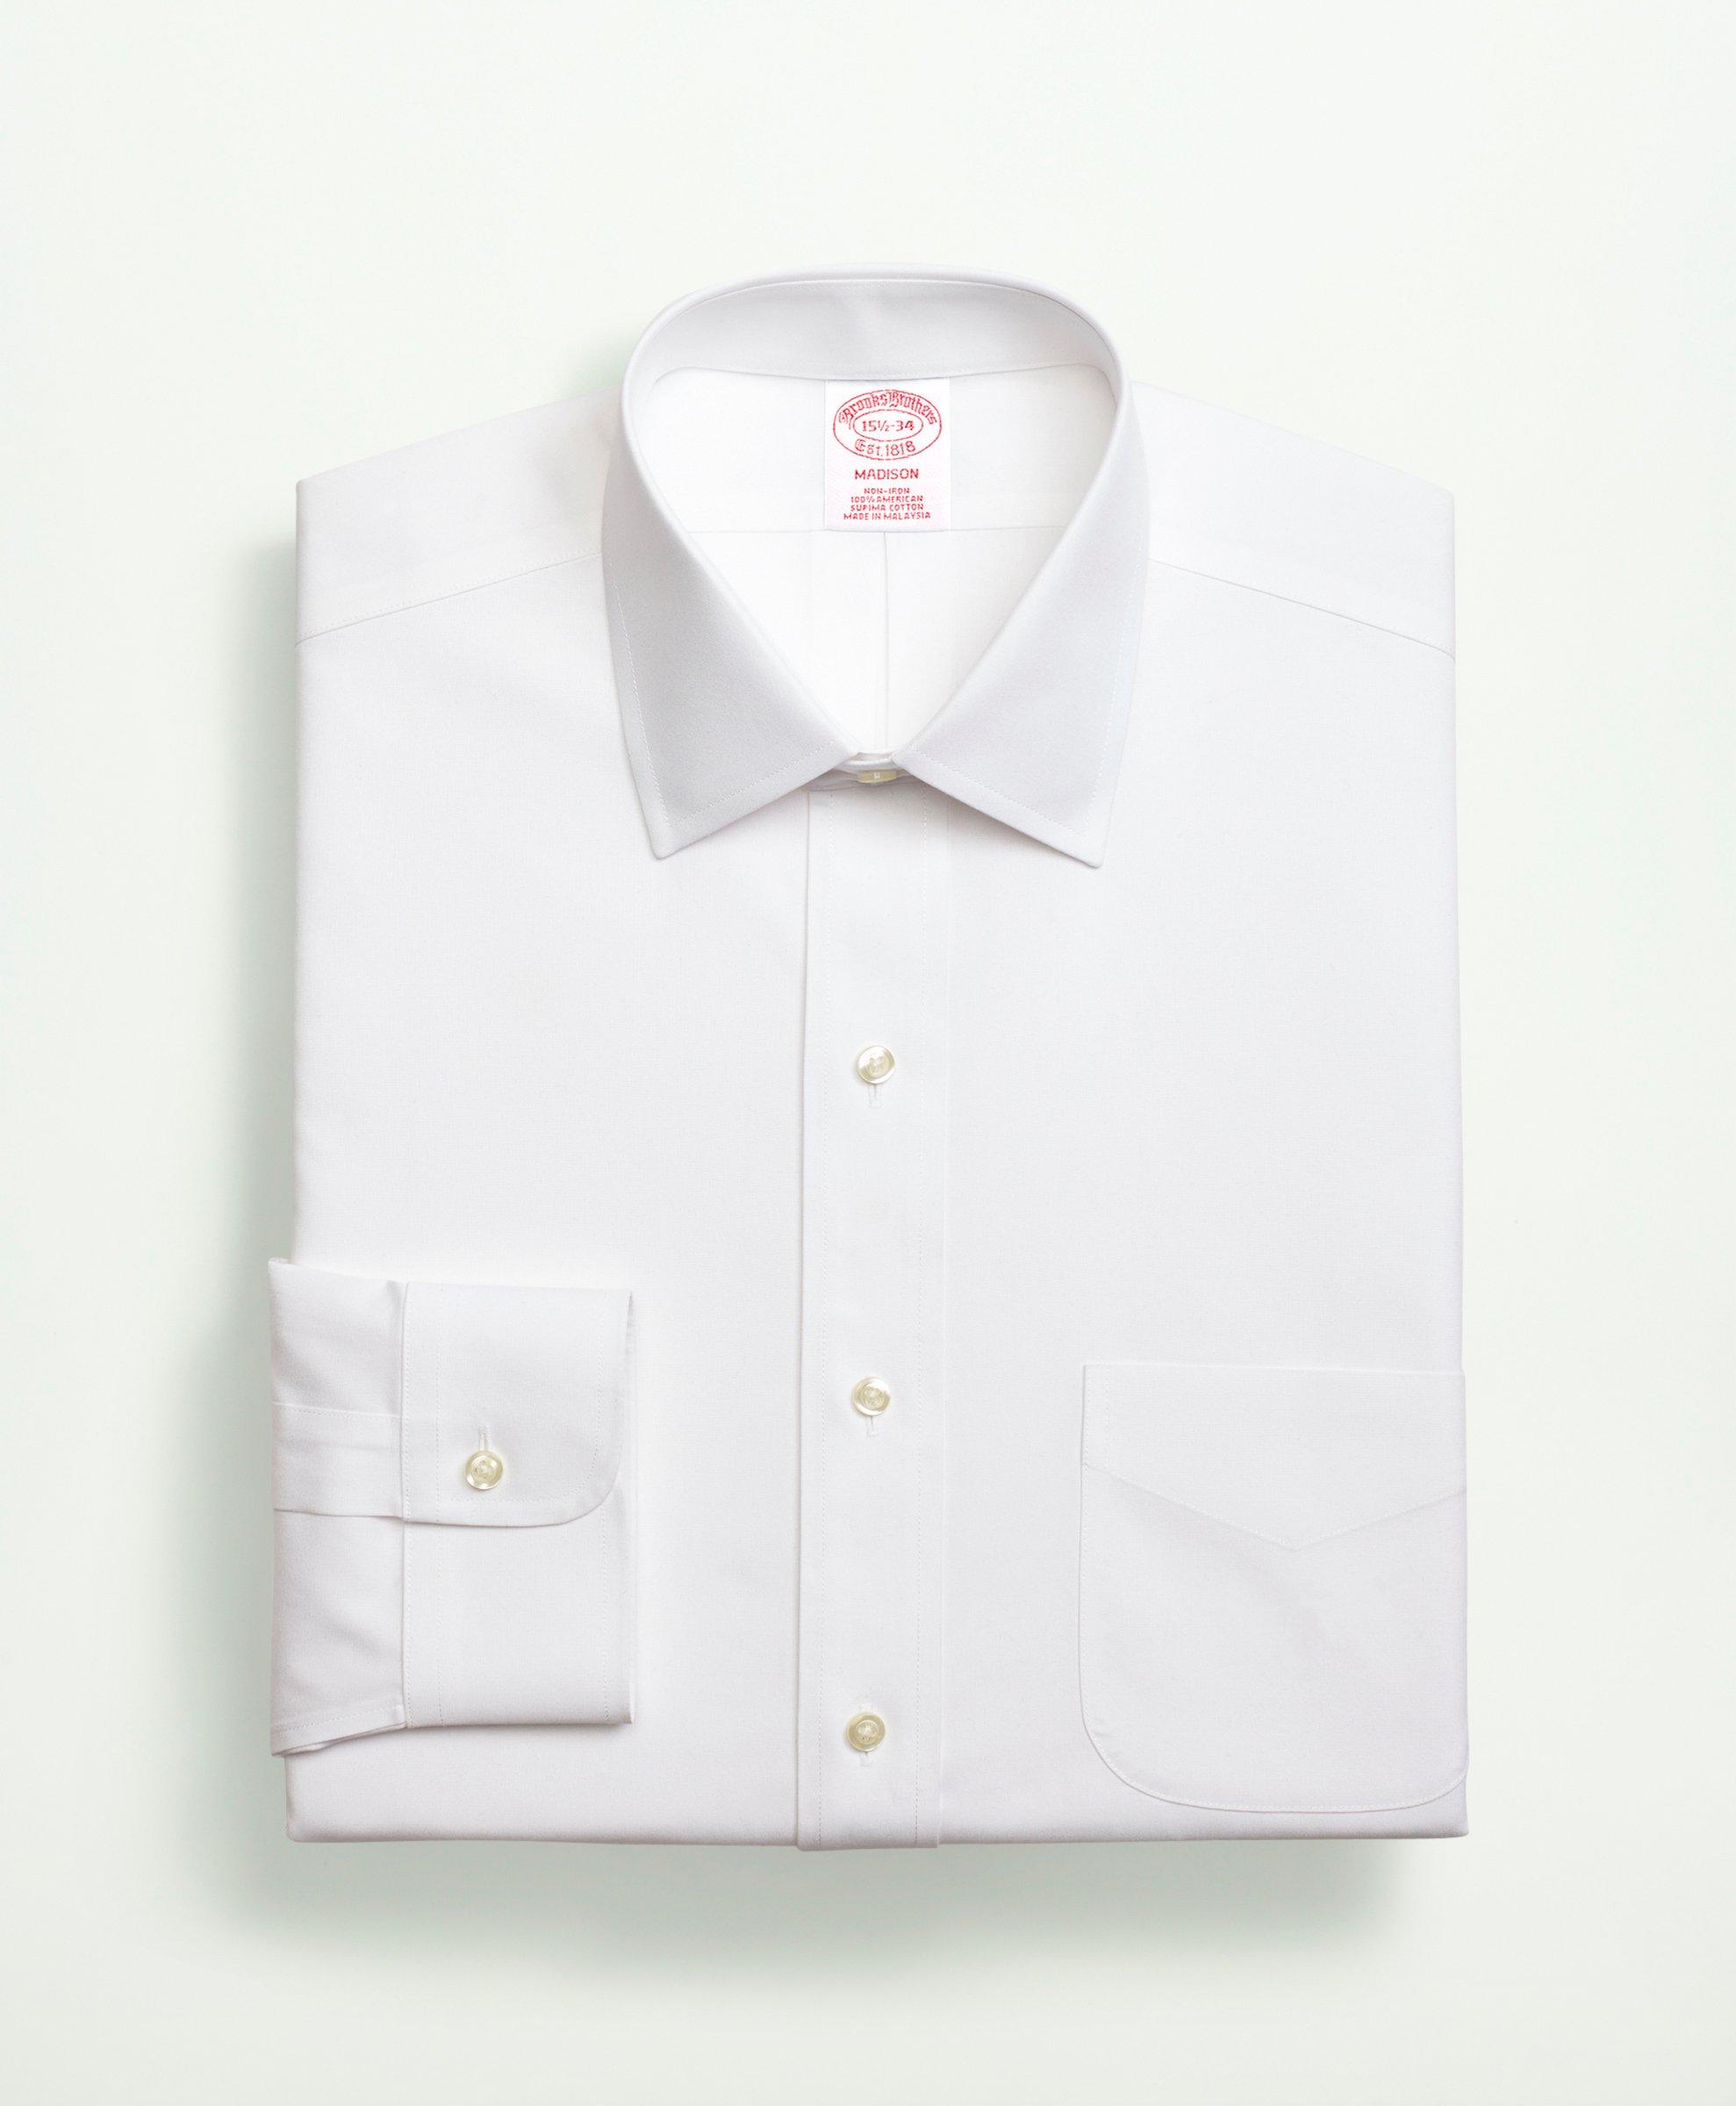 Brooks Brothers button down silk shirt